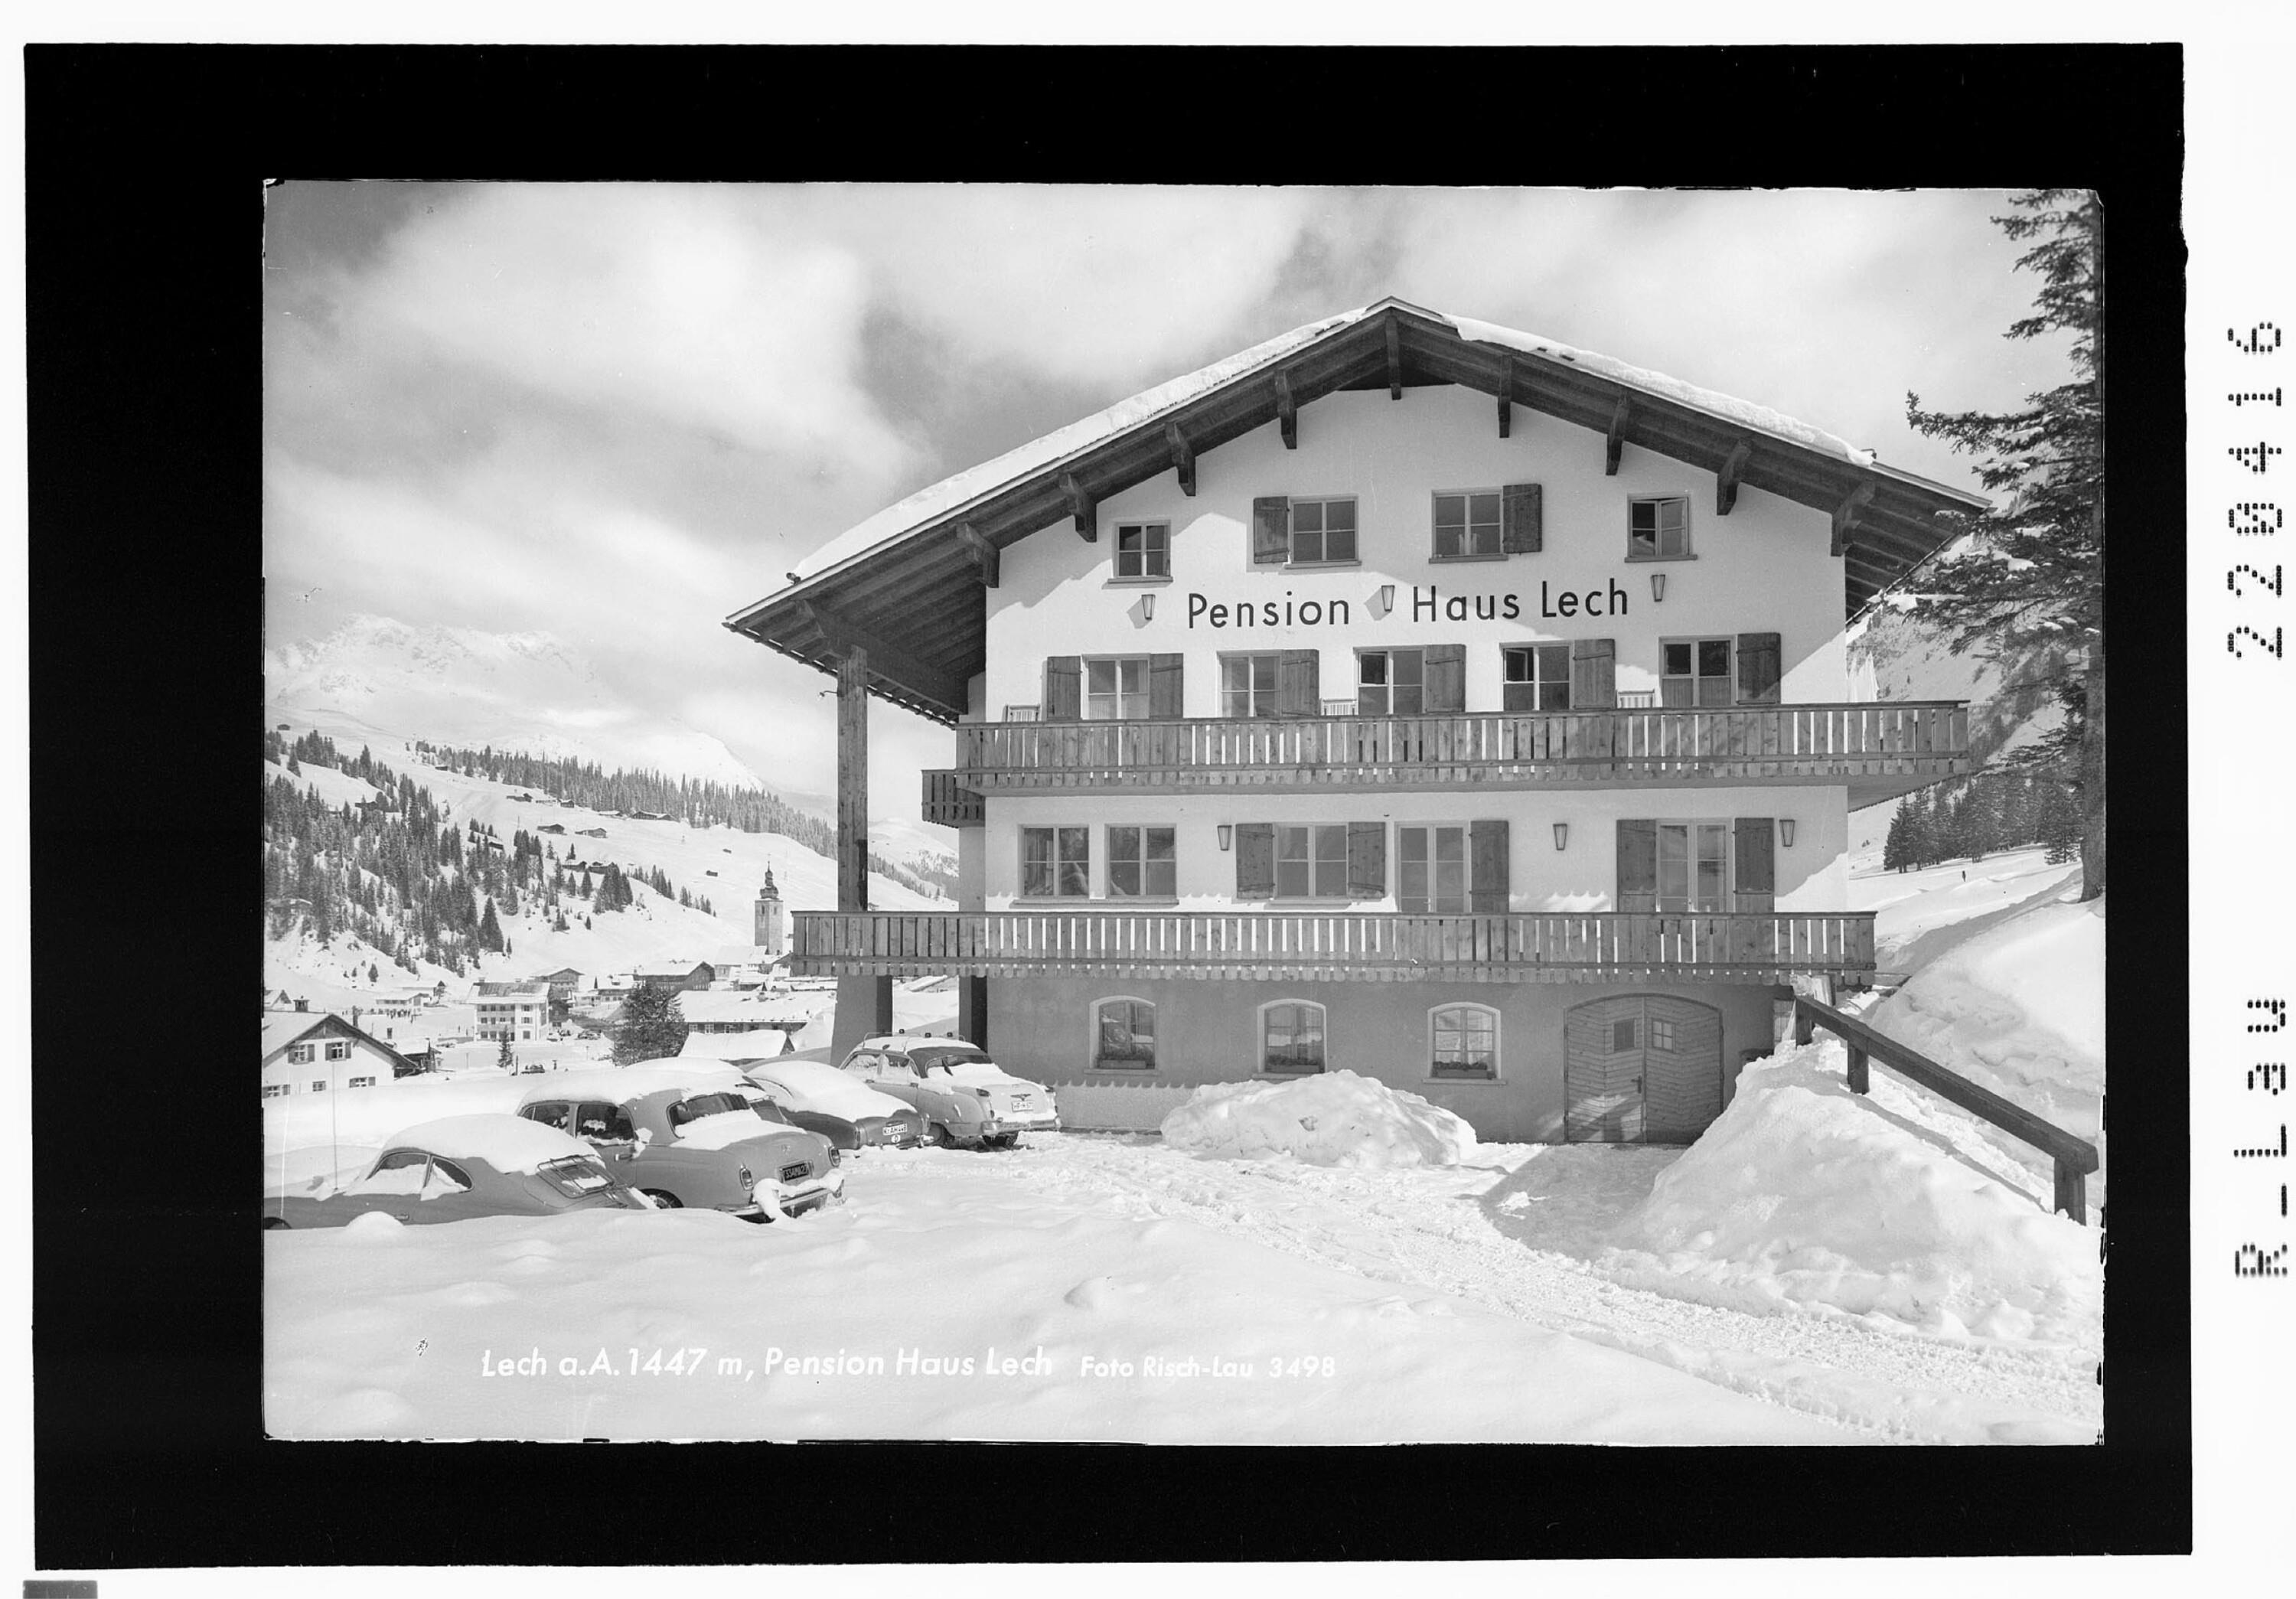 Lech am Arlberg 1447 m / Pension Haus Lech></div>


    <hr>
    <div class=